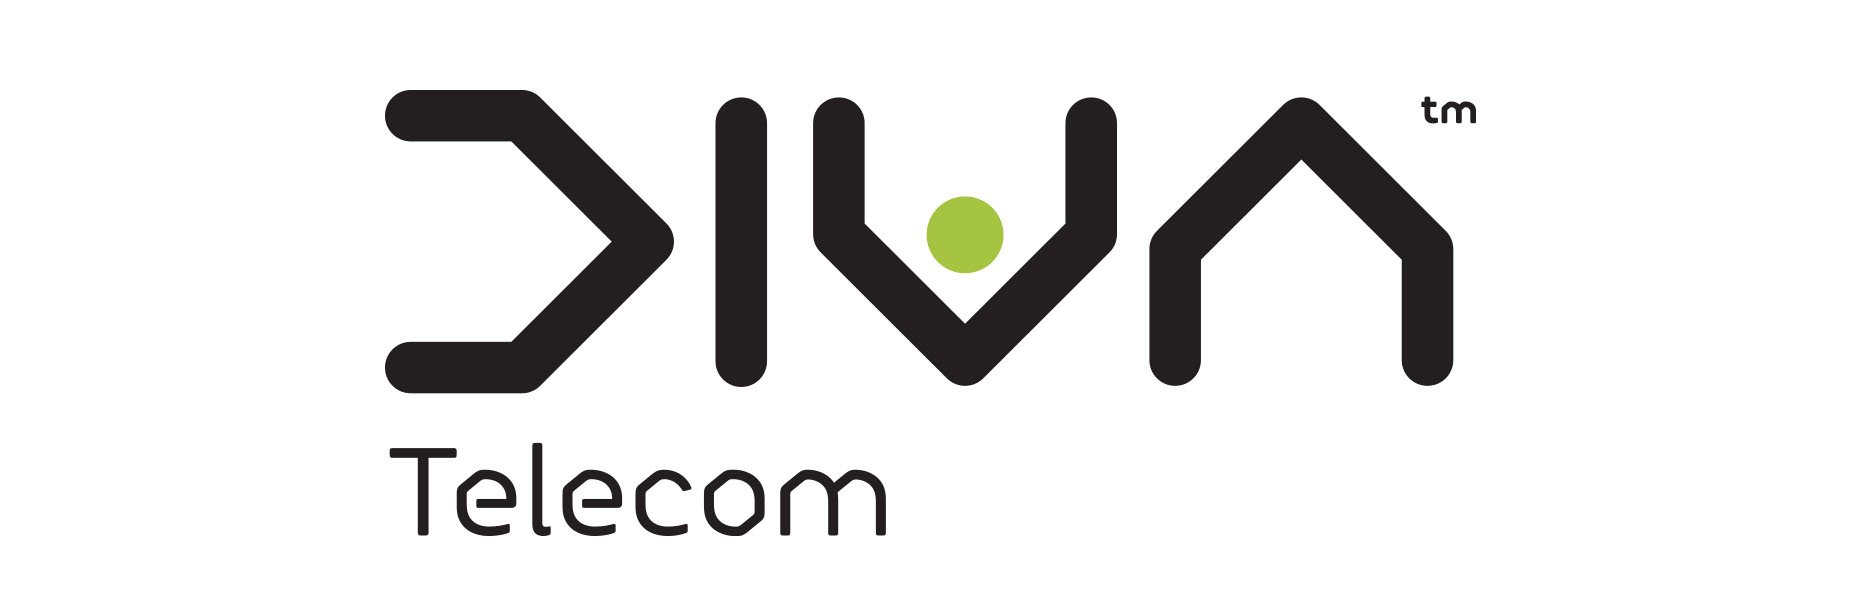 diva_logo